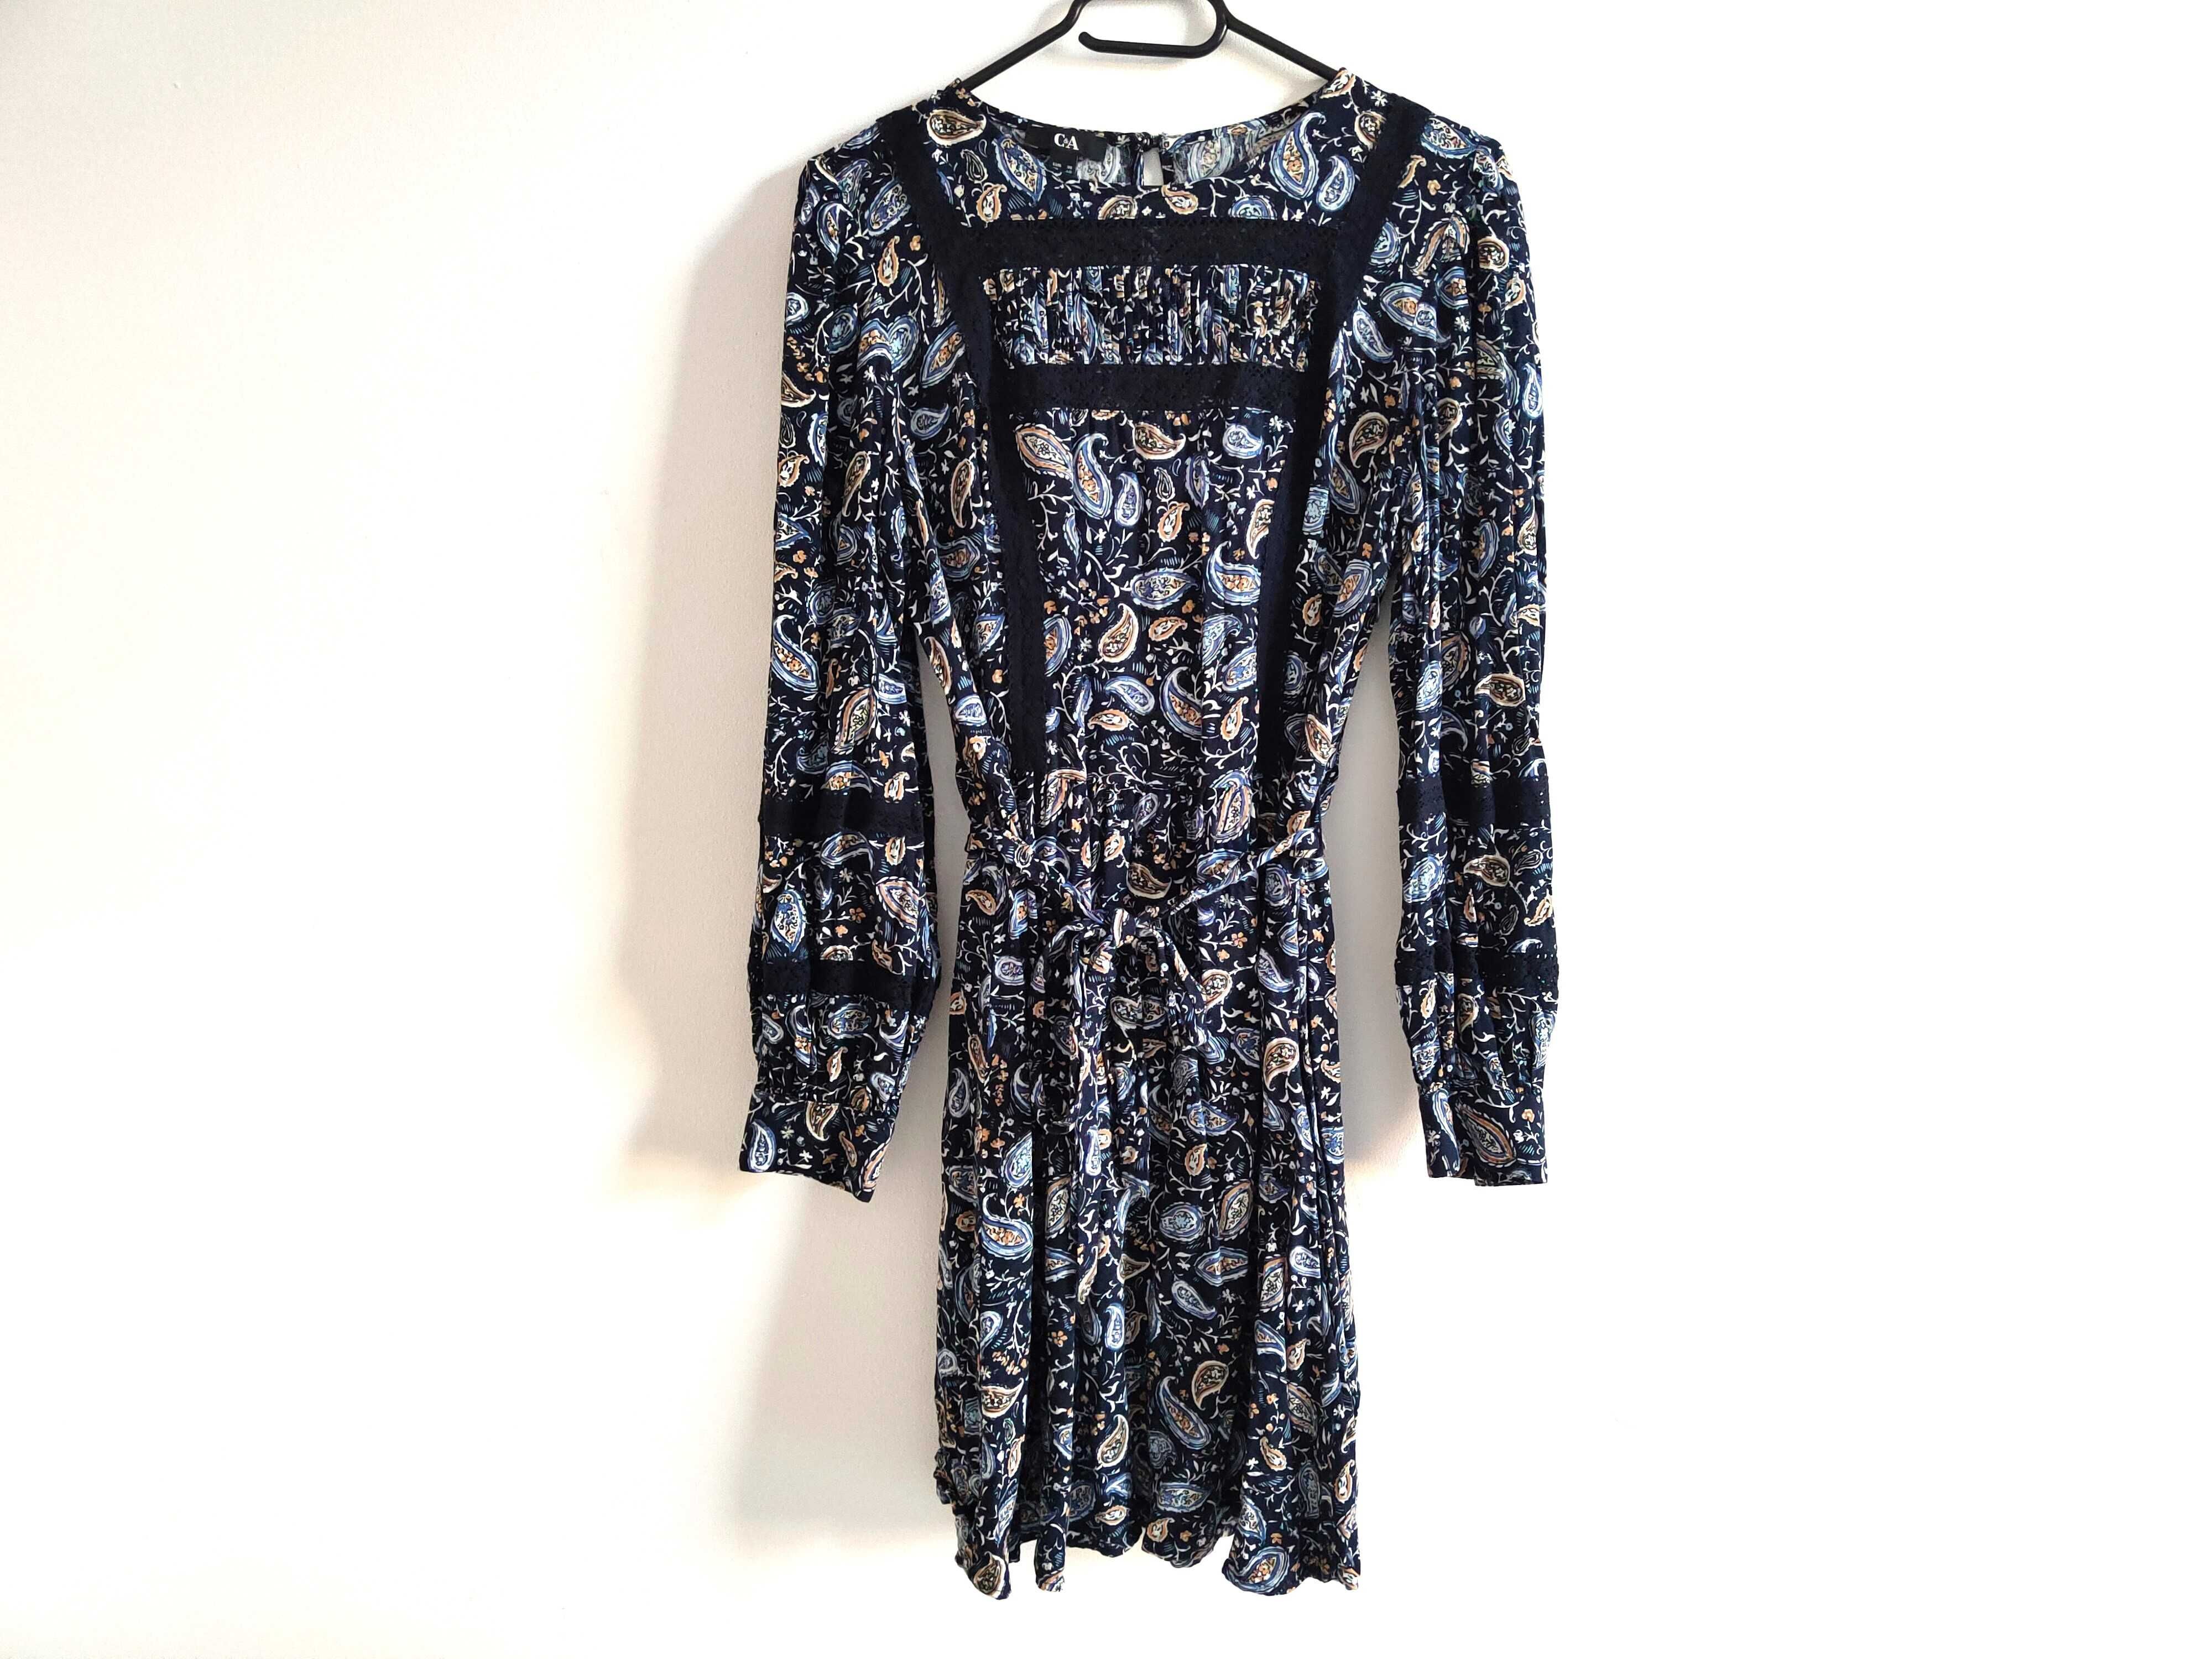 C&A niebieska sukienka boho koronka paisley retro vintage